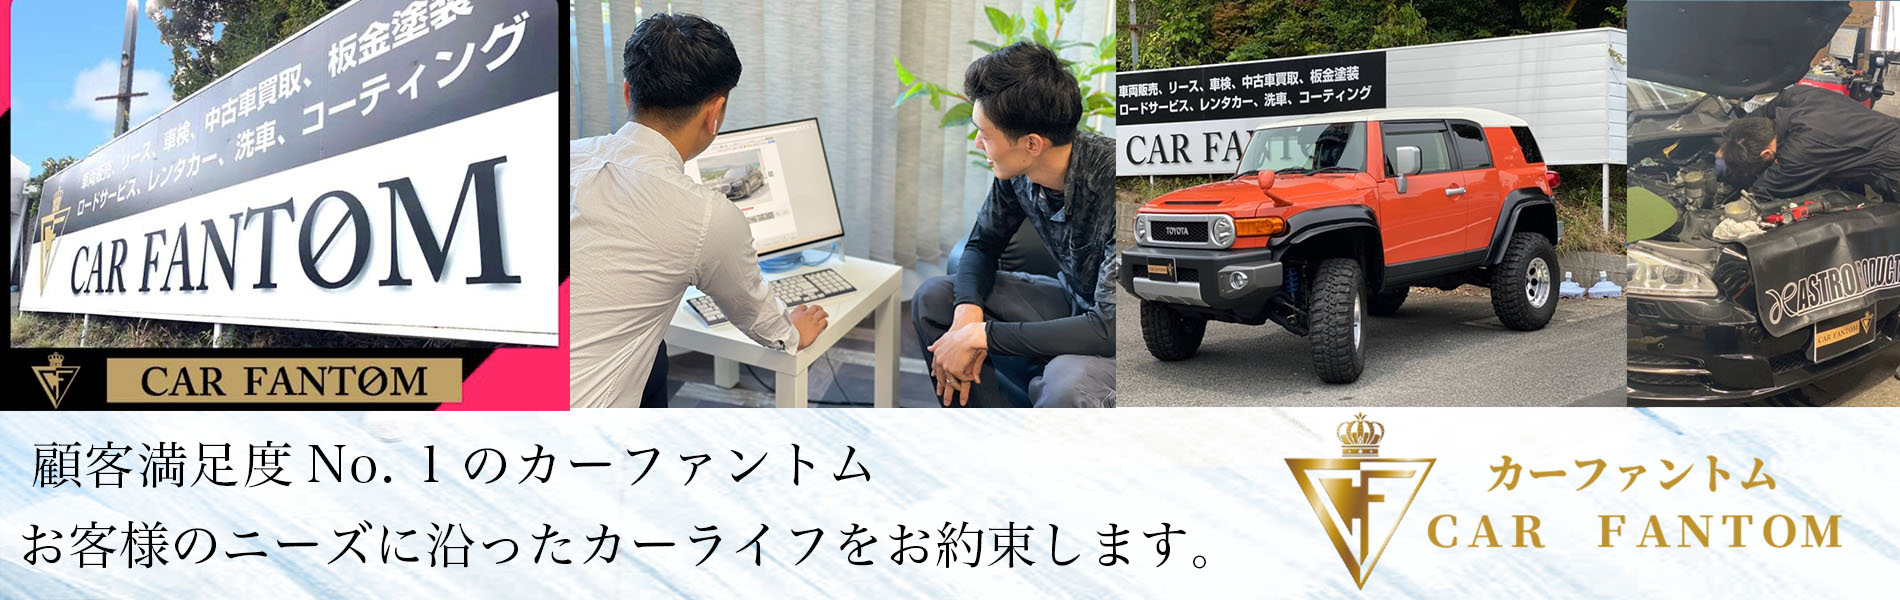 Car Fantom カーファントム 山口県宇部市の自動車販売店 Car Fantom